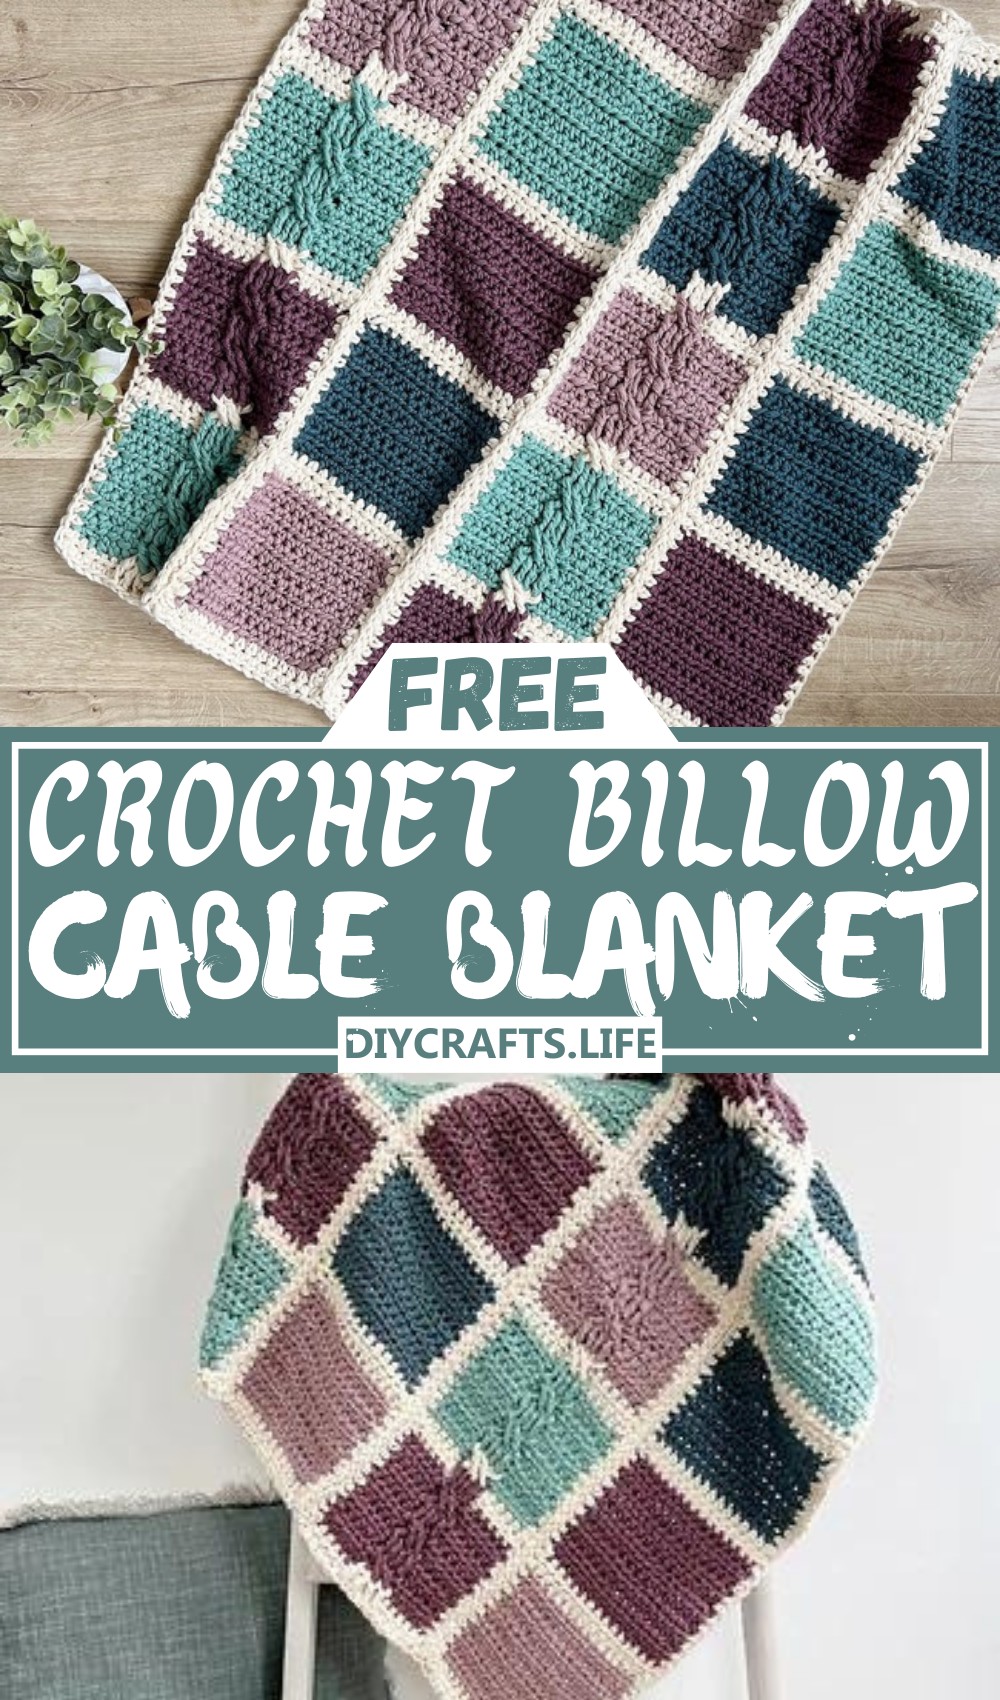 Crochet Billow Patchwork Cable Blanket 